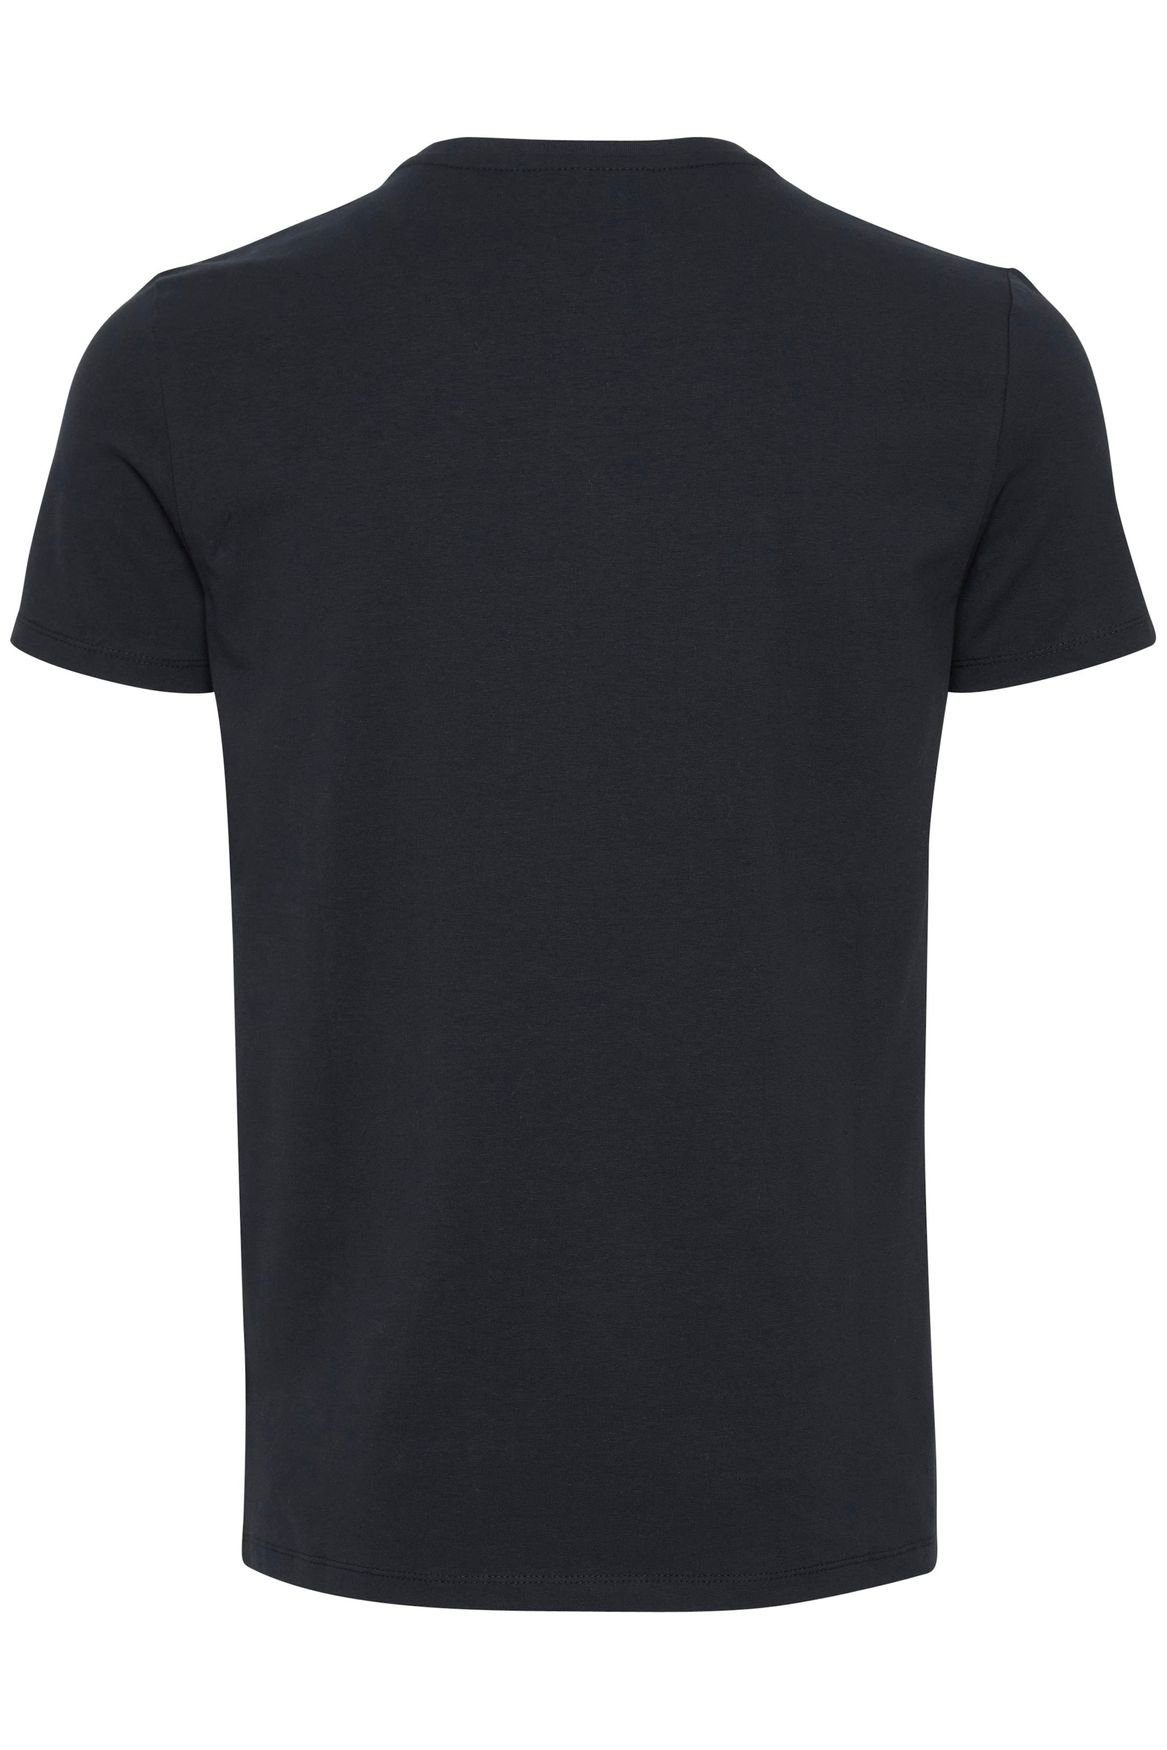 Casual Friday T-Shirt V-Ausschnitt T-Shirt Einfarbiges 4458 Kurzarm Dunkelblau in Basic LINCOLN